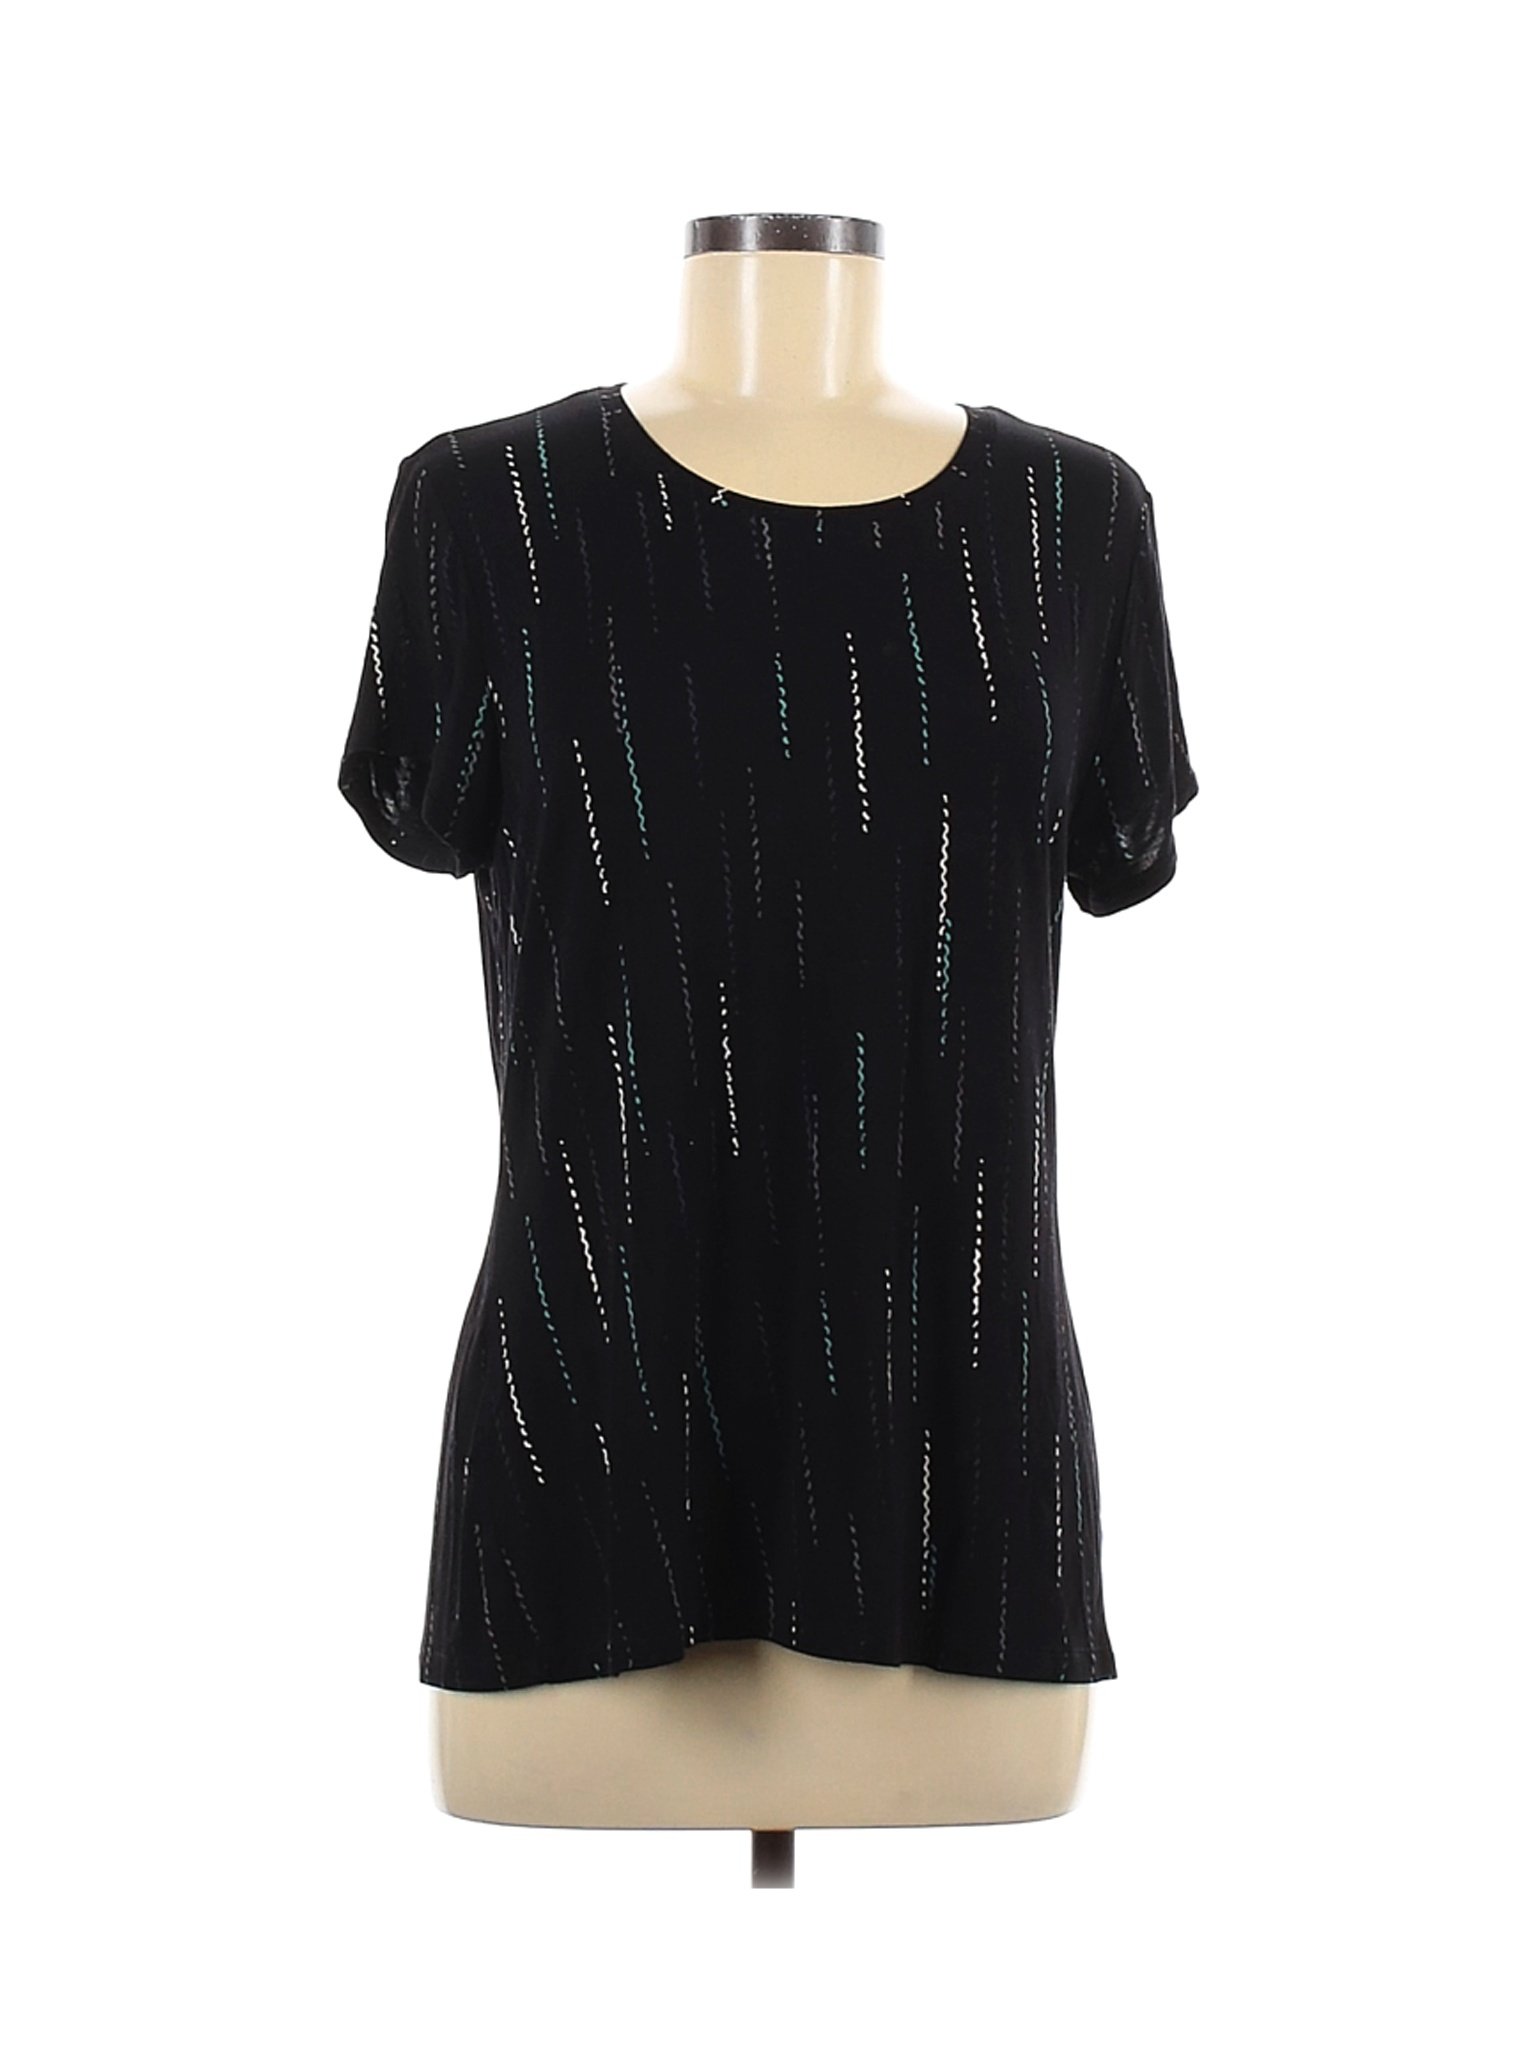 Apt. 9 Women Black Short Sleeve T-Shirt L | eBay